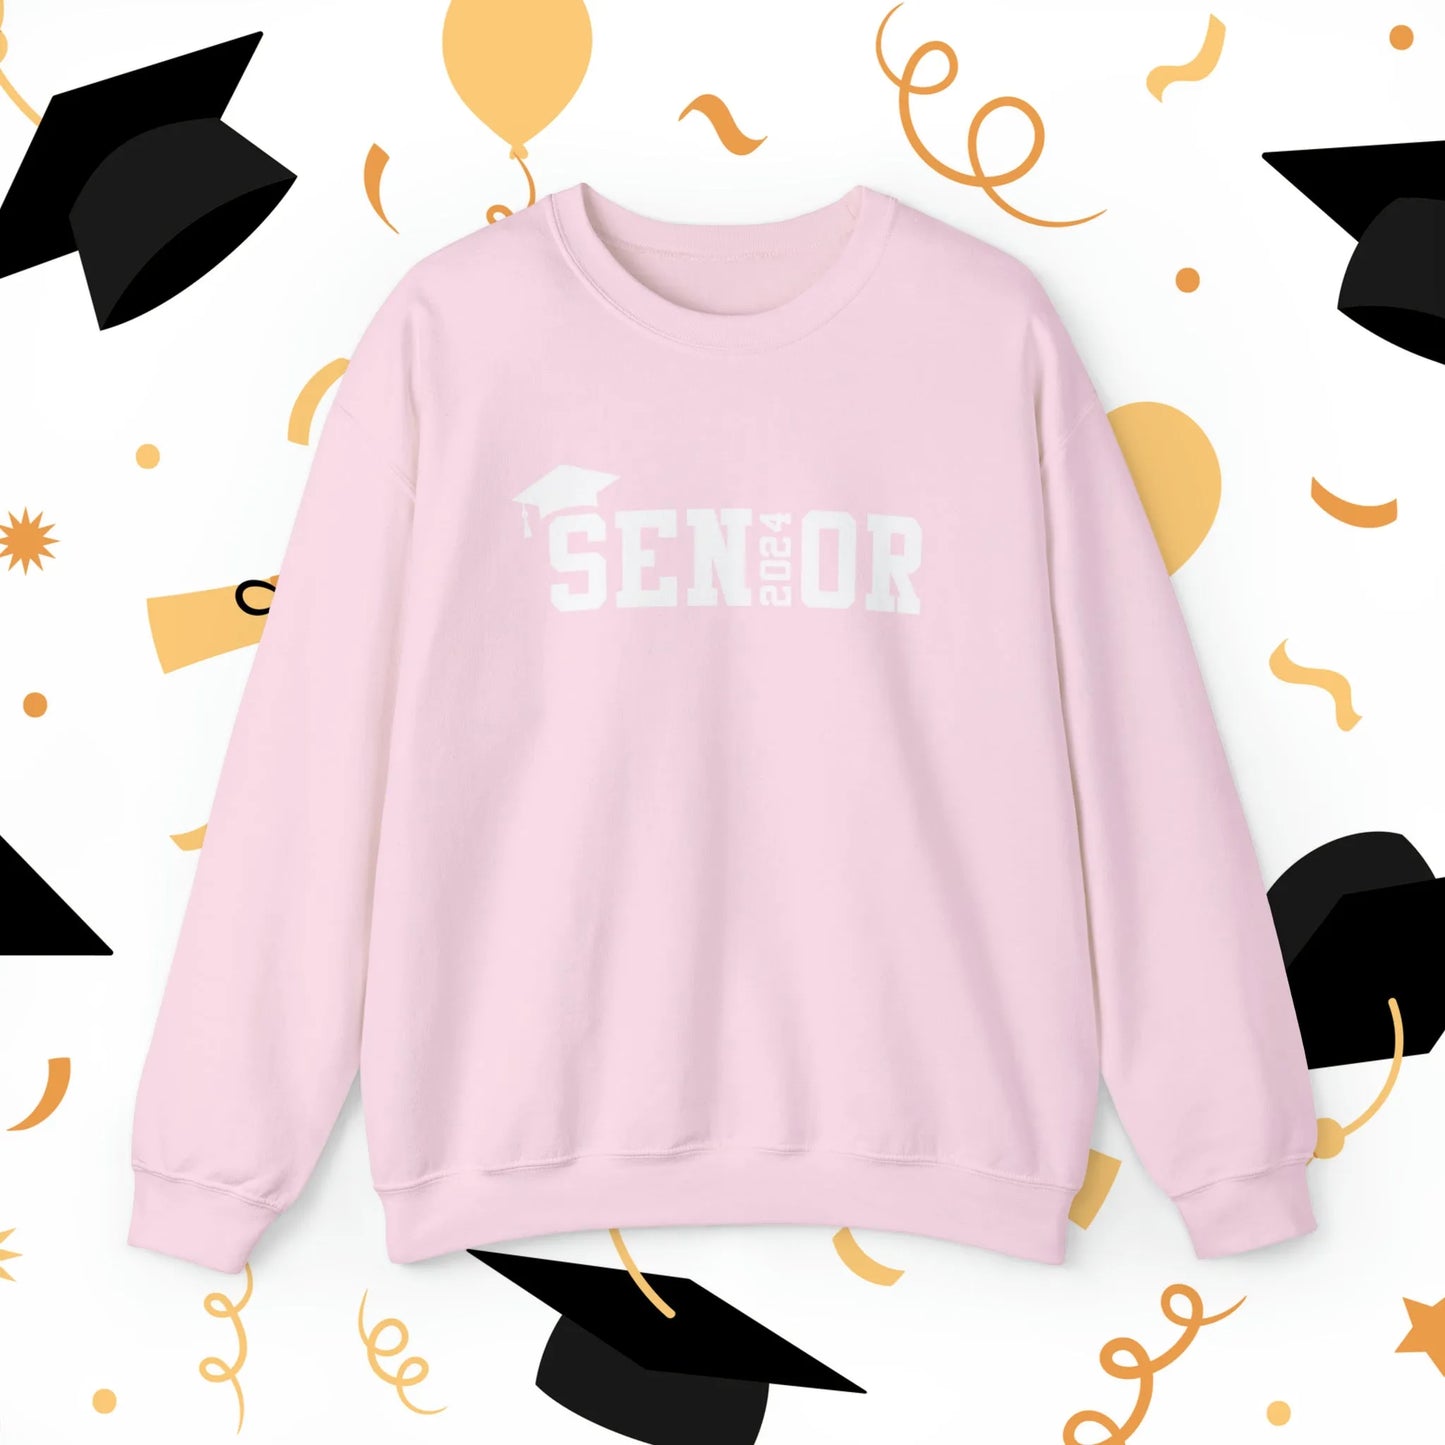 Senior 2024 Crewneck Sweatshirt - Senior 2024 Sweatshirt - Class of 2024 Sweatshirt Pink